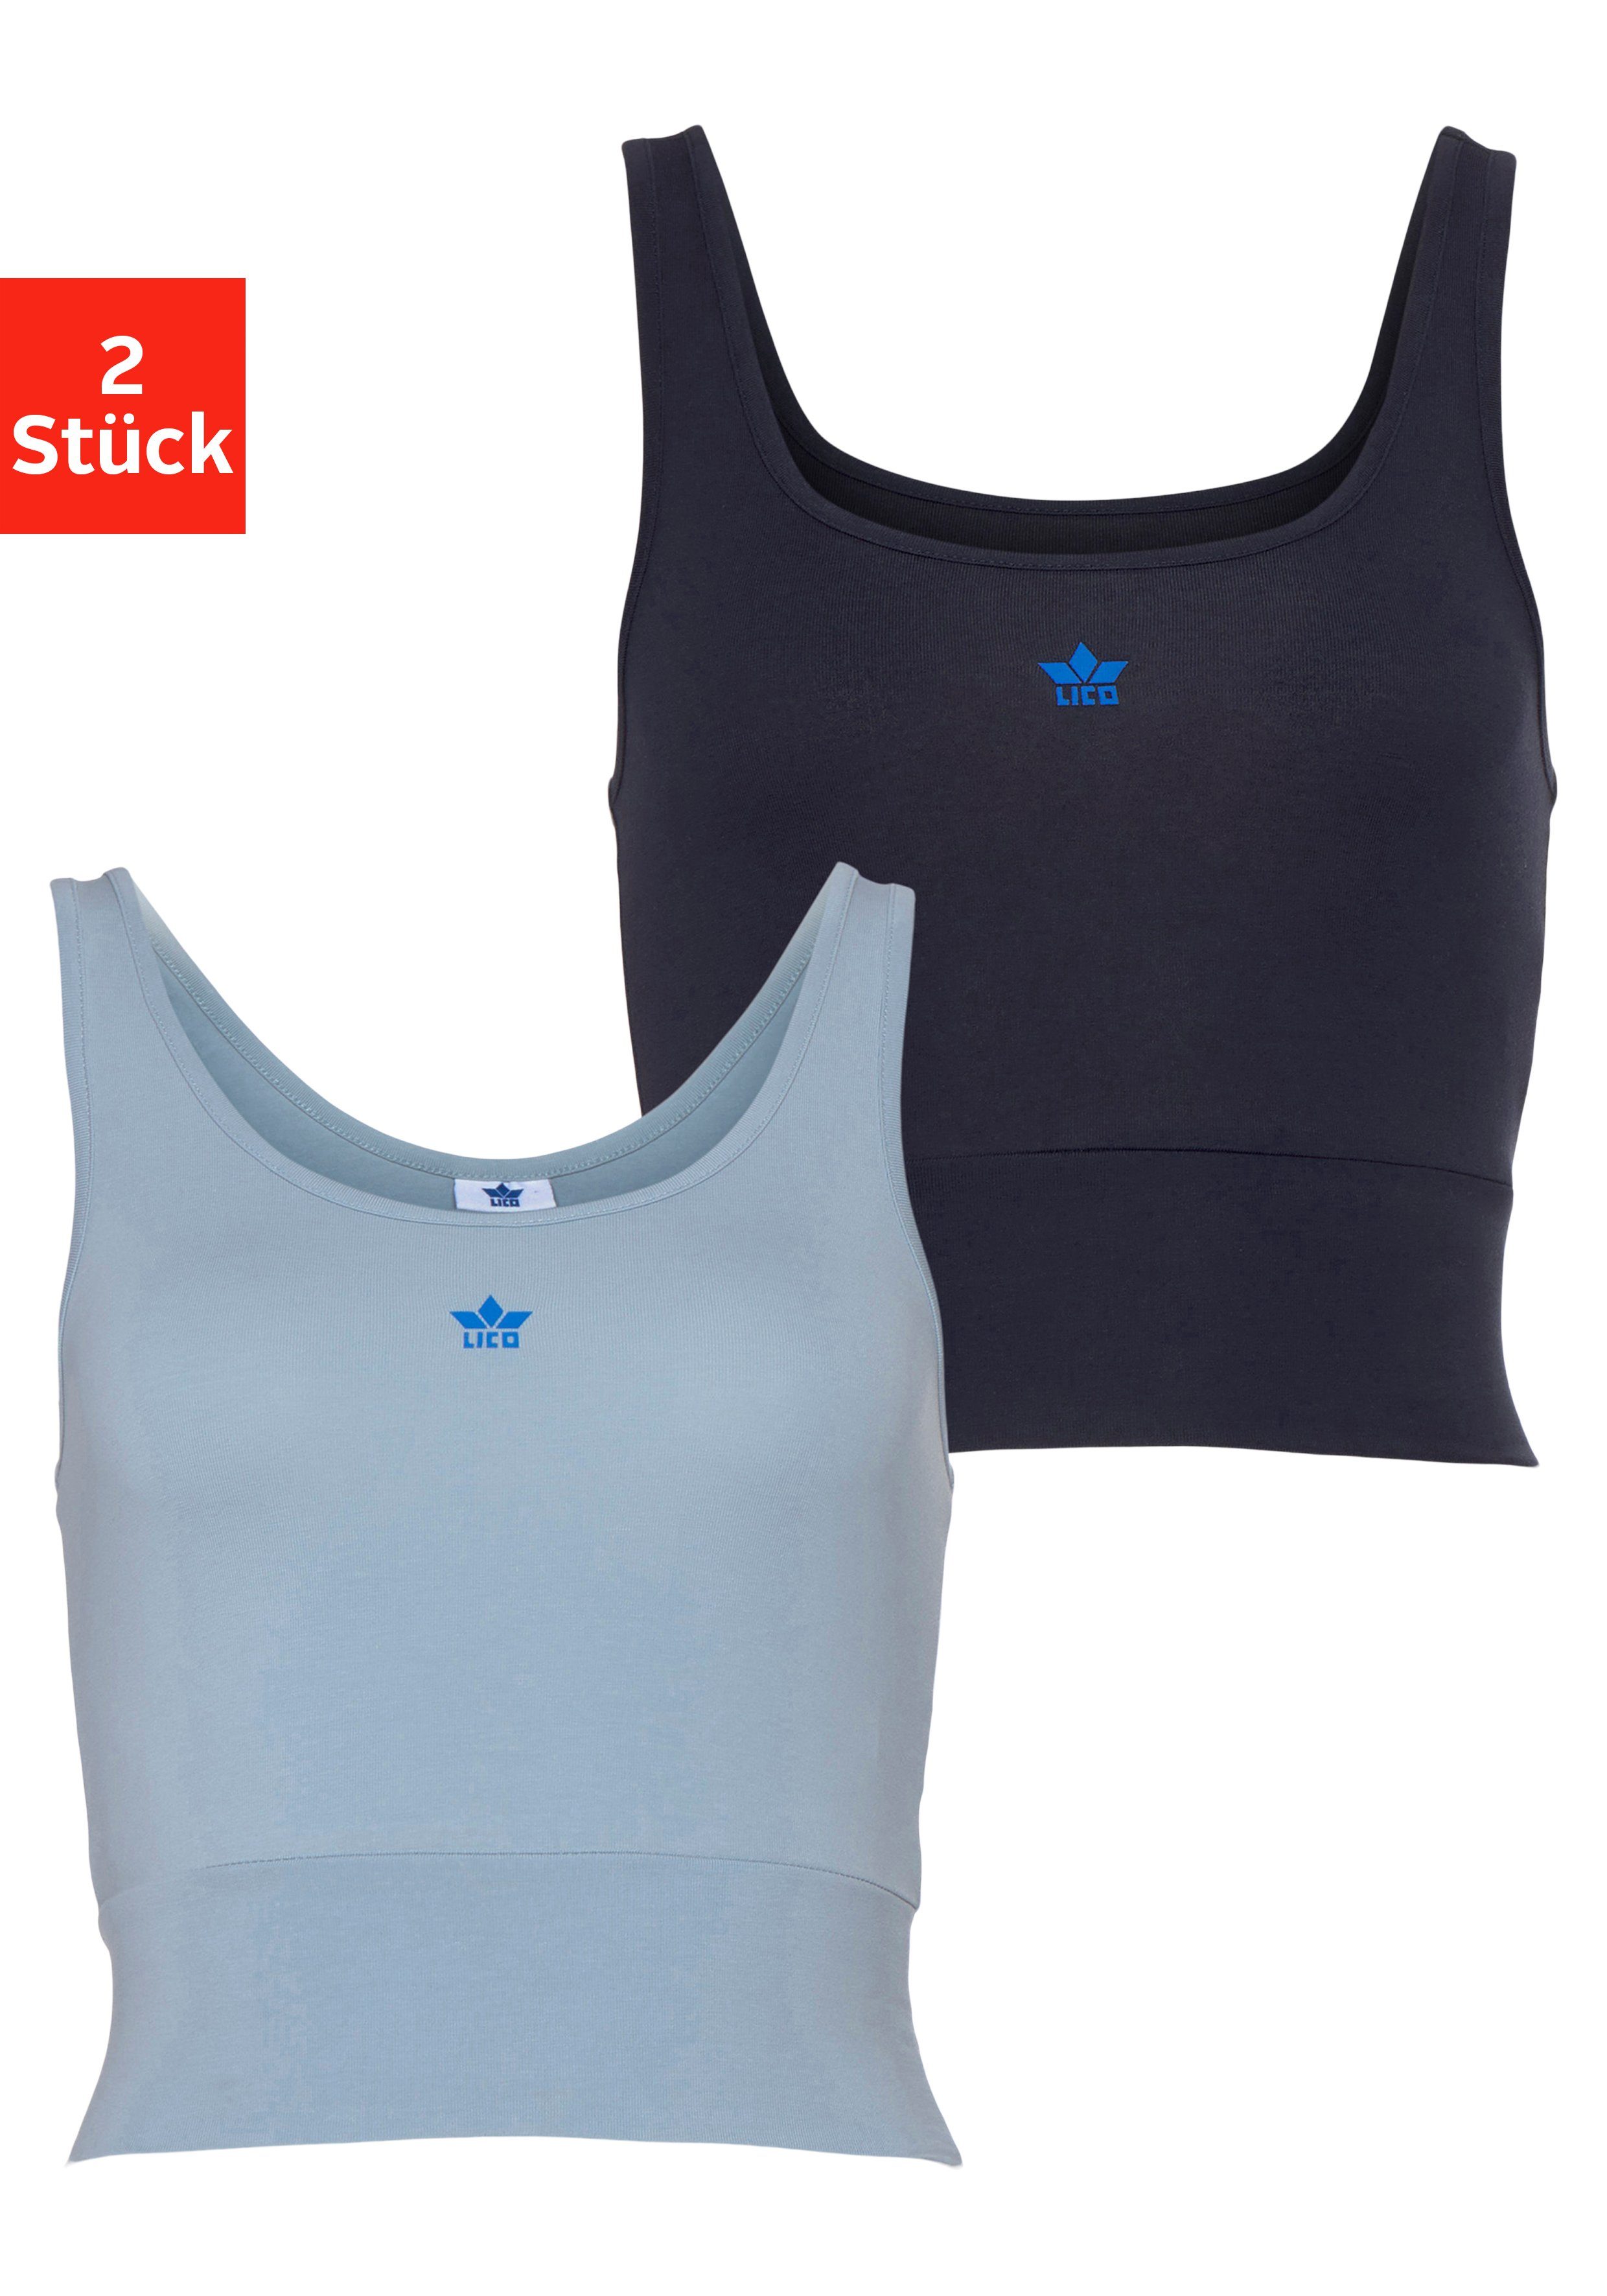 Lico Funktionsshirt (2er-Pack) im Doppelpack, Loungewear hellblau, navy | Funktionsshirts